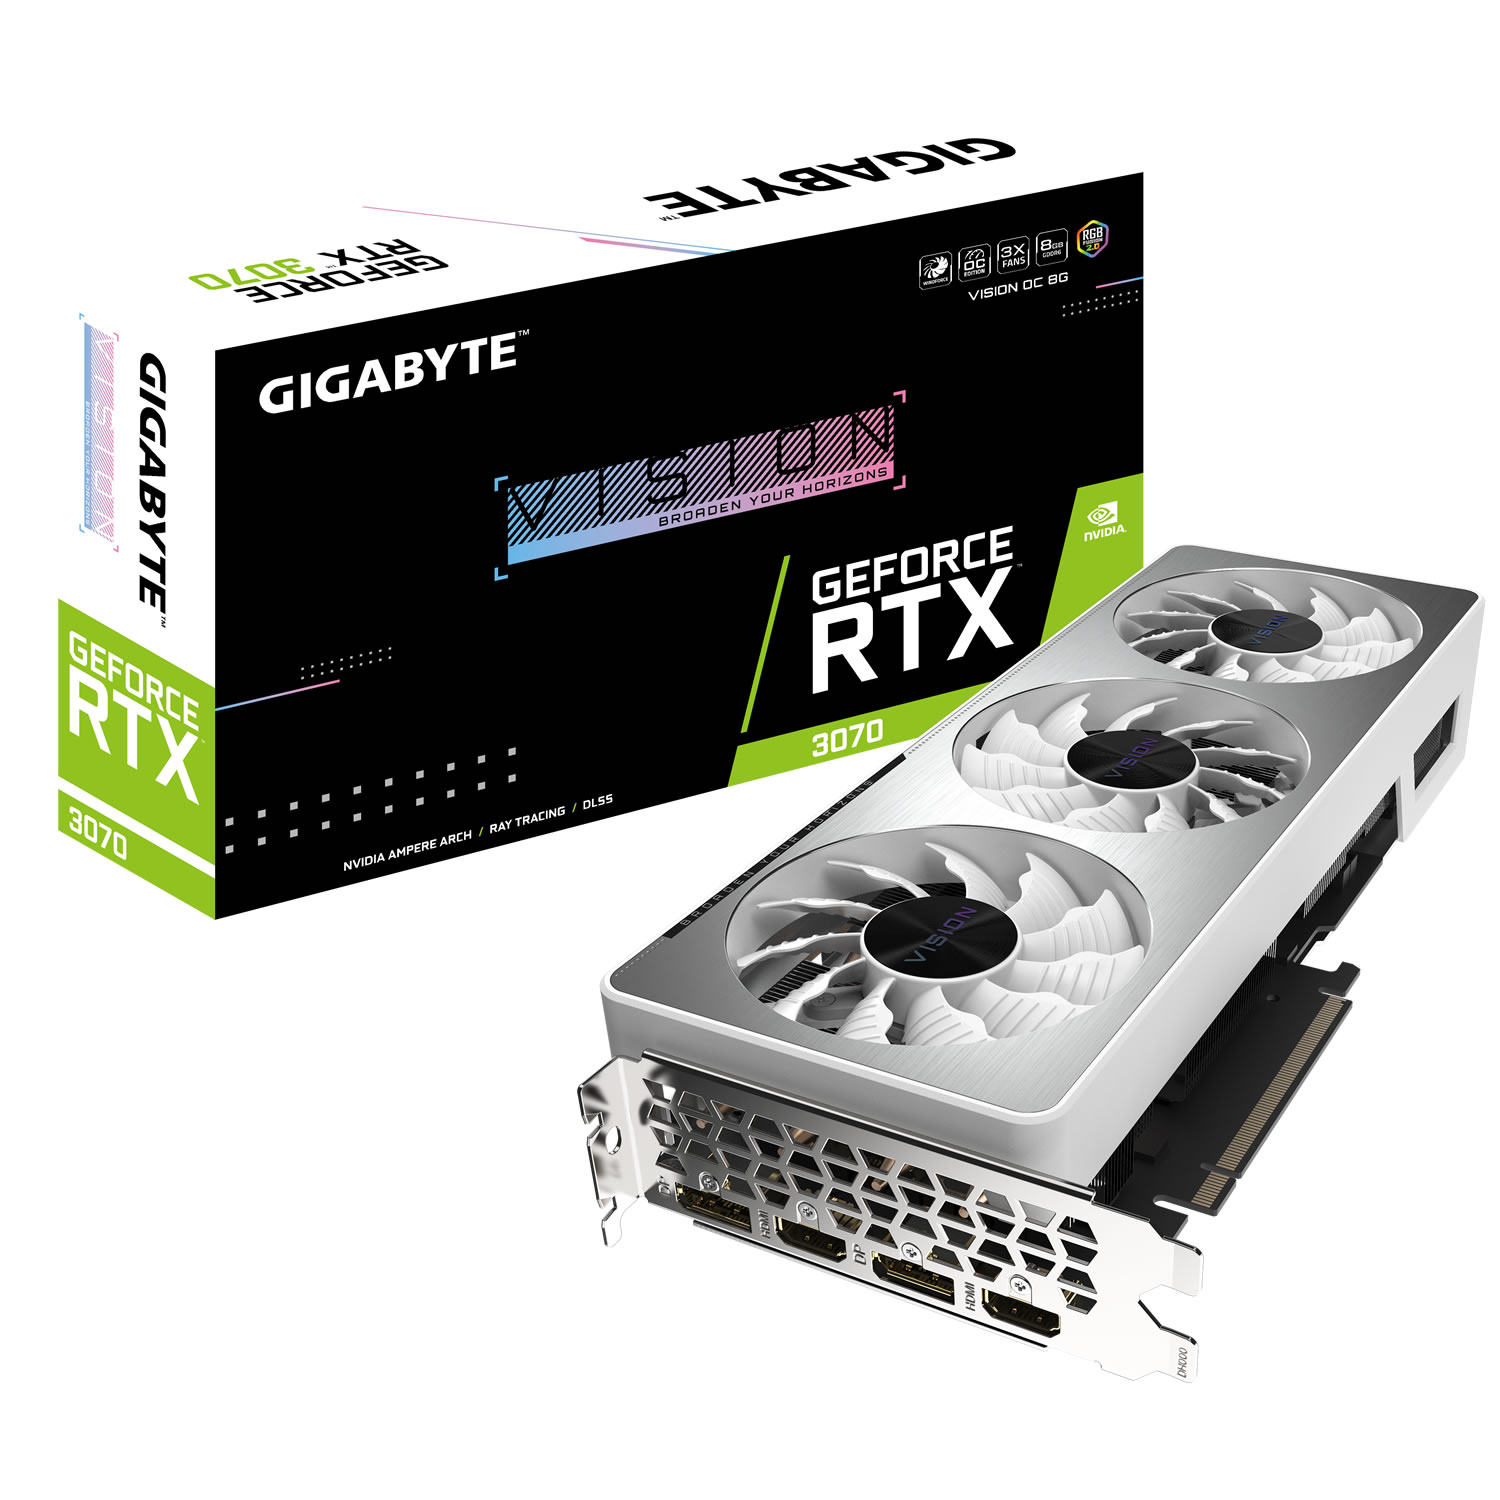 Gigabyte - Gigabyte GeForce RTX 3070 Vision OC LHR 8GB GDDR6 PCI-Express Graphics Card